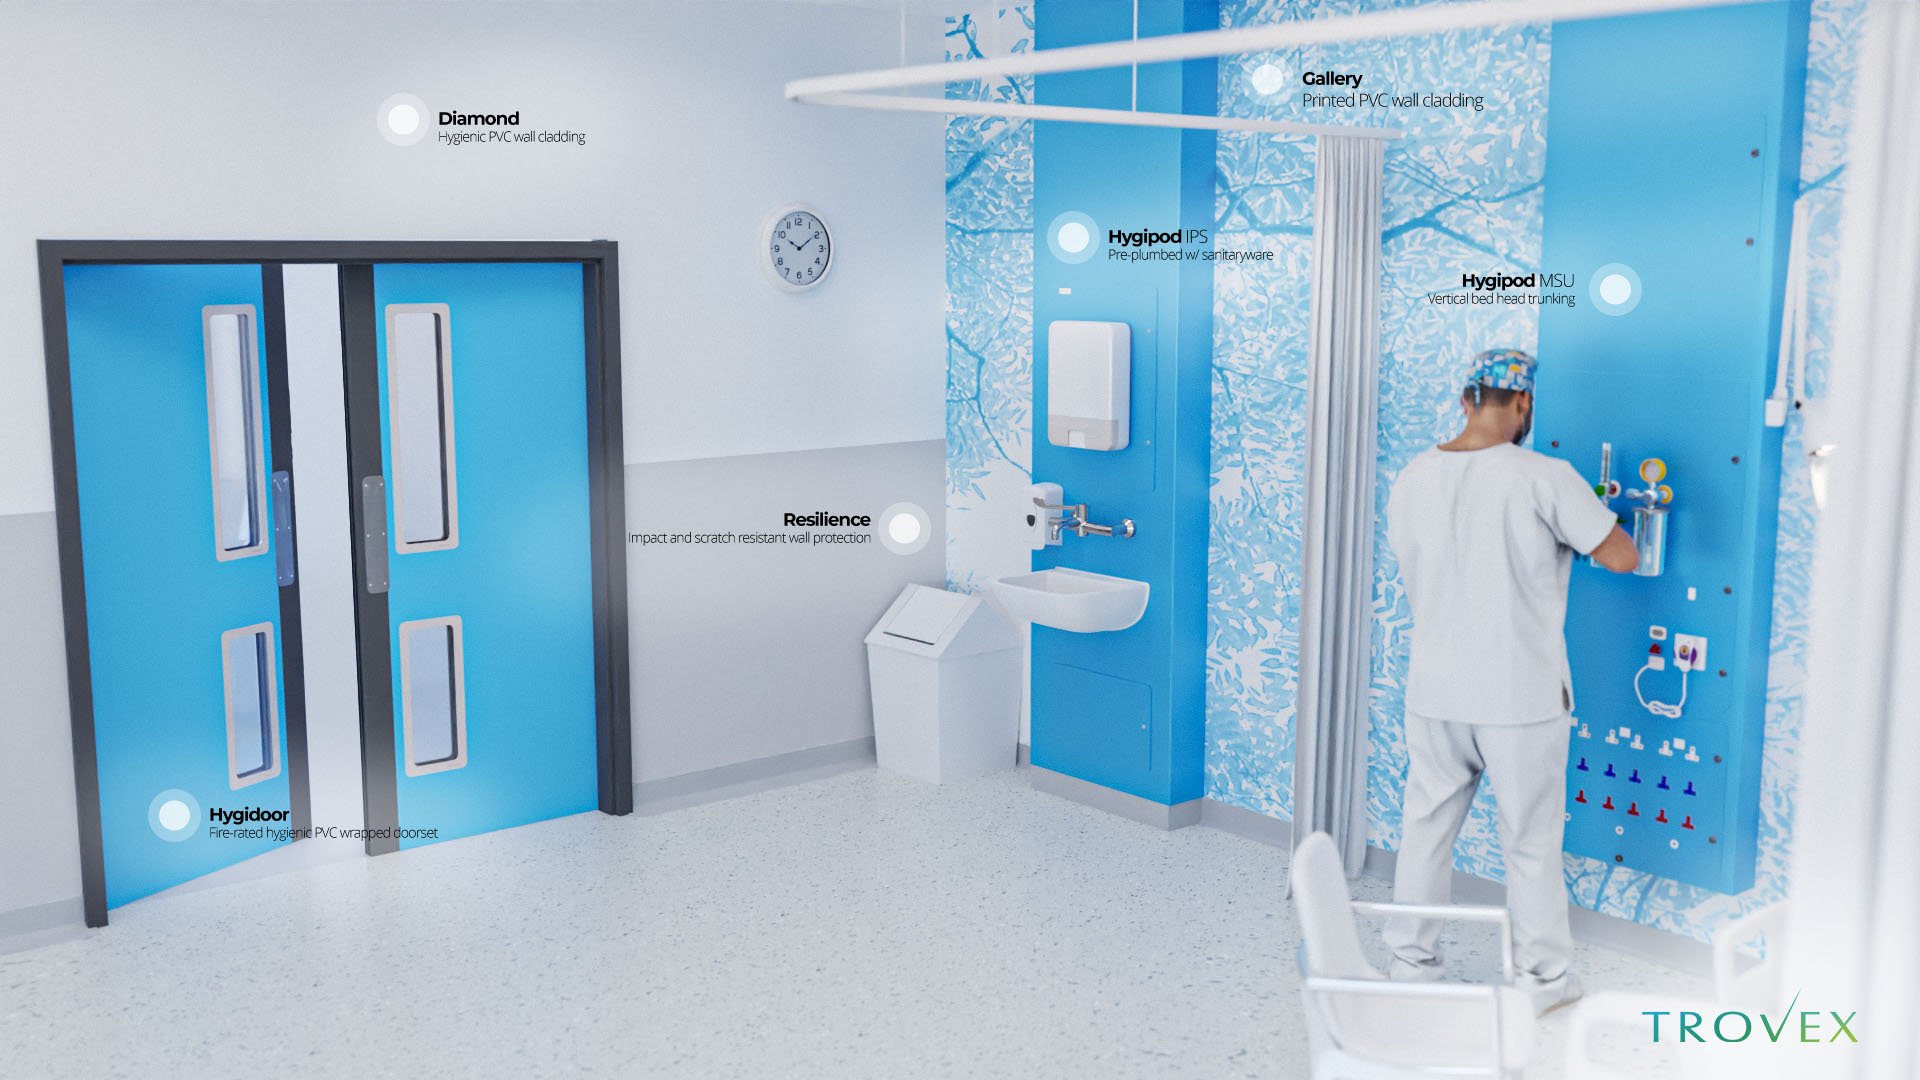 Trovex ward environment featuring Hygipod IPS + Hygidoor + Hygipod MSU + Diamond wall cladding and more